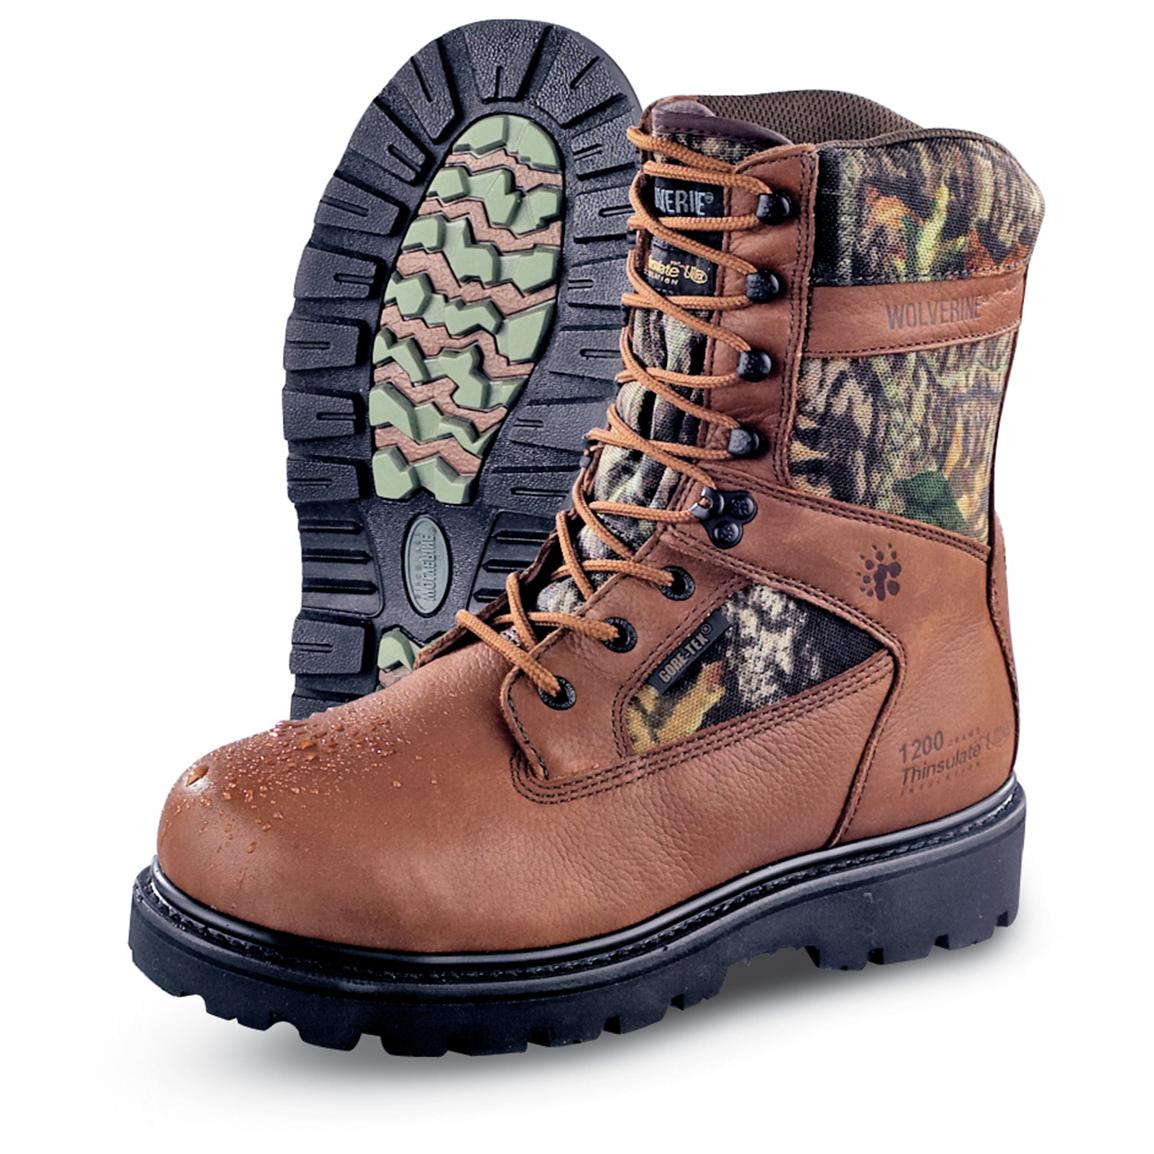 wolverine 1200 gram thinsulate boots